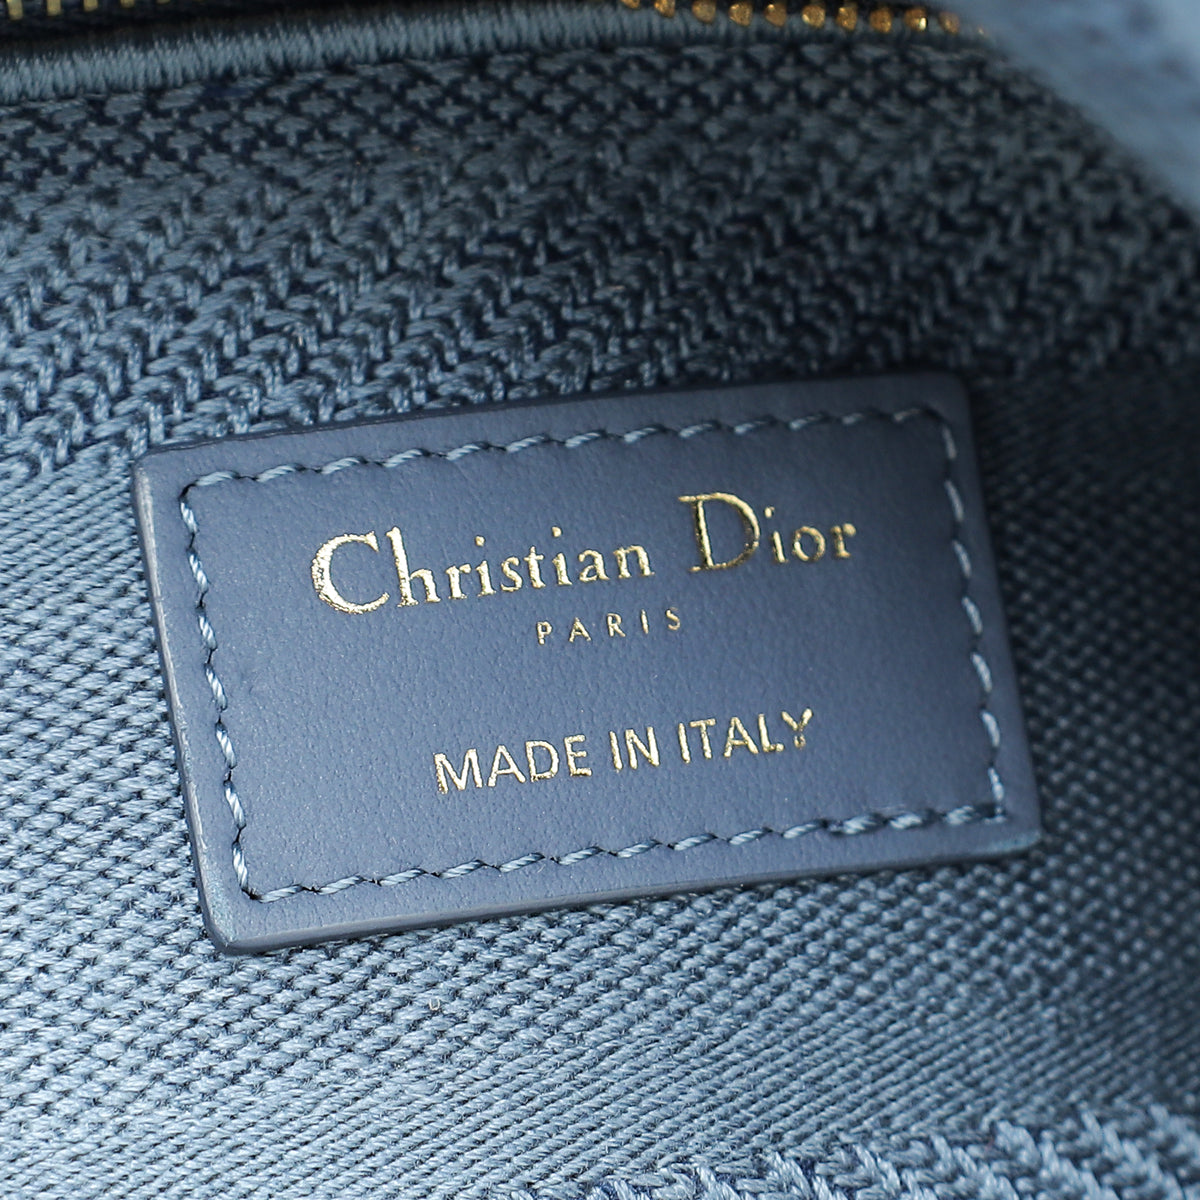 Christian Dior Blue Cannage Embroidered Lady D-Lite Medium Bag